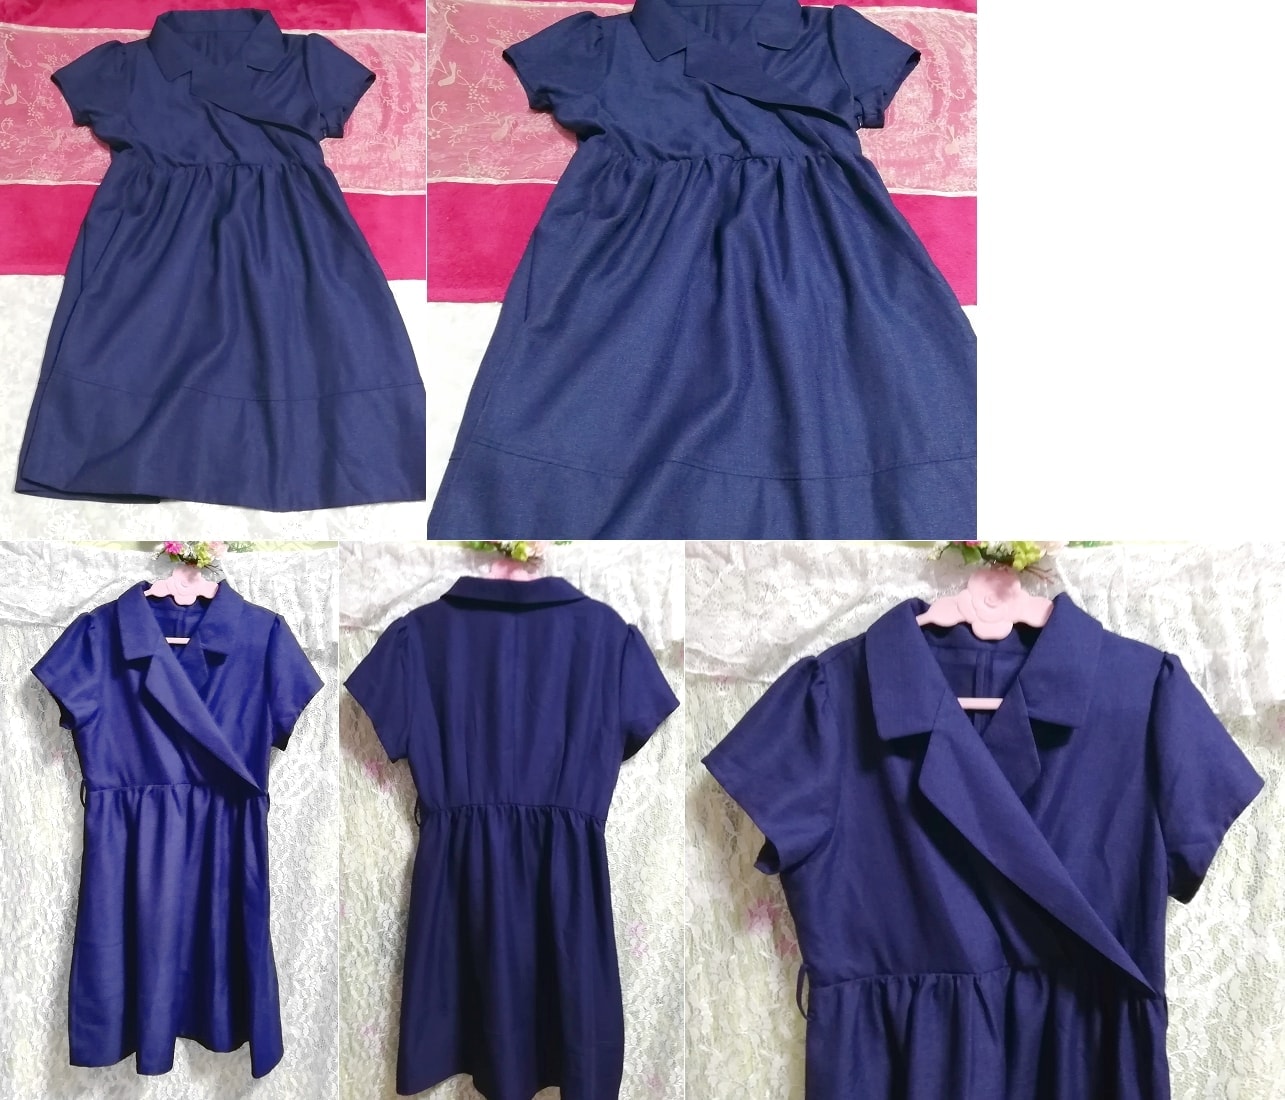 Vestido tipo túnica estilo camisón negligee de manga corta estilo traje azul marino, mini falda, talla xl y superior